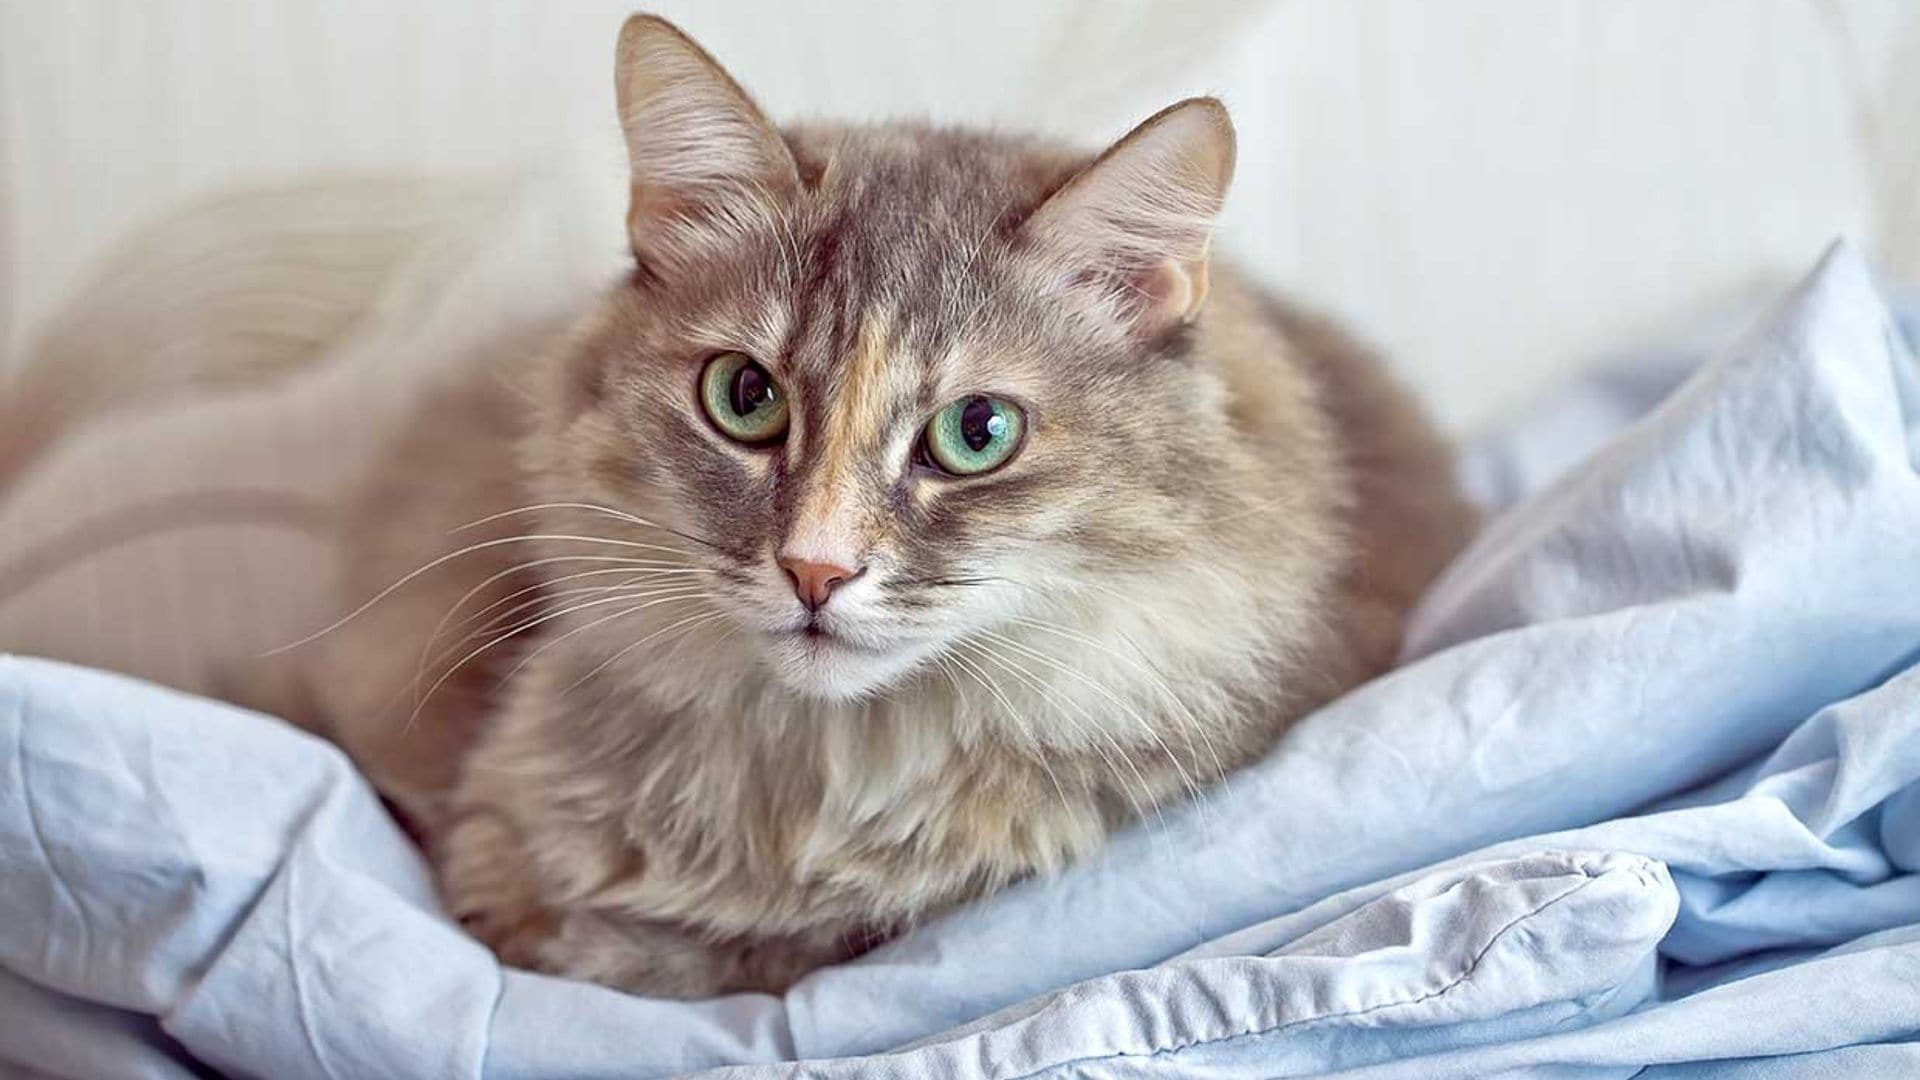 Cuarentena con mascotas: consejos para detectar si tu gato se siente 'invadido'